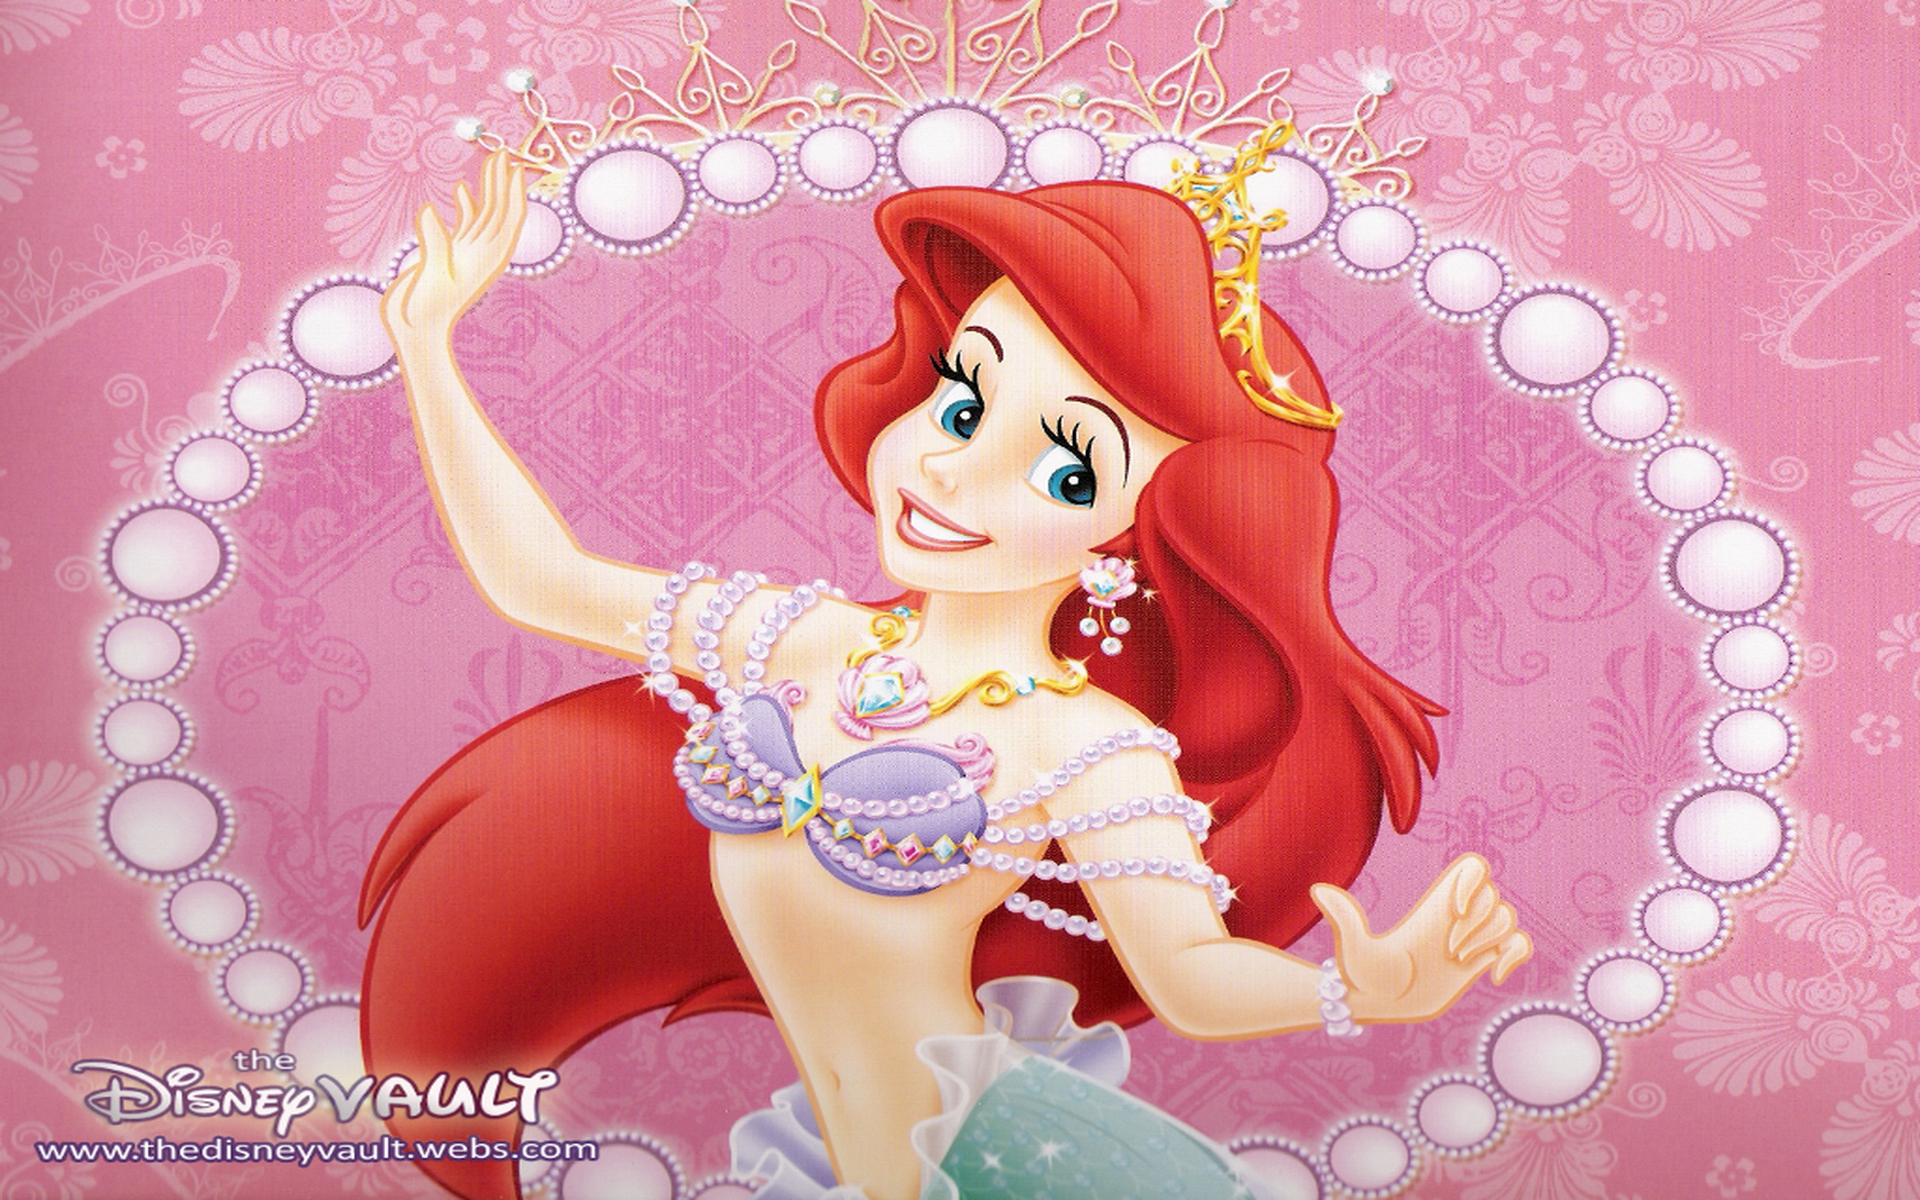 Ariel Wallpaper disney princess 6474419 1024 768jpg Wallpaper Disney